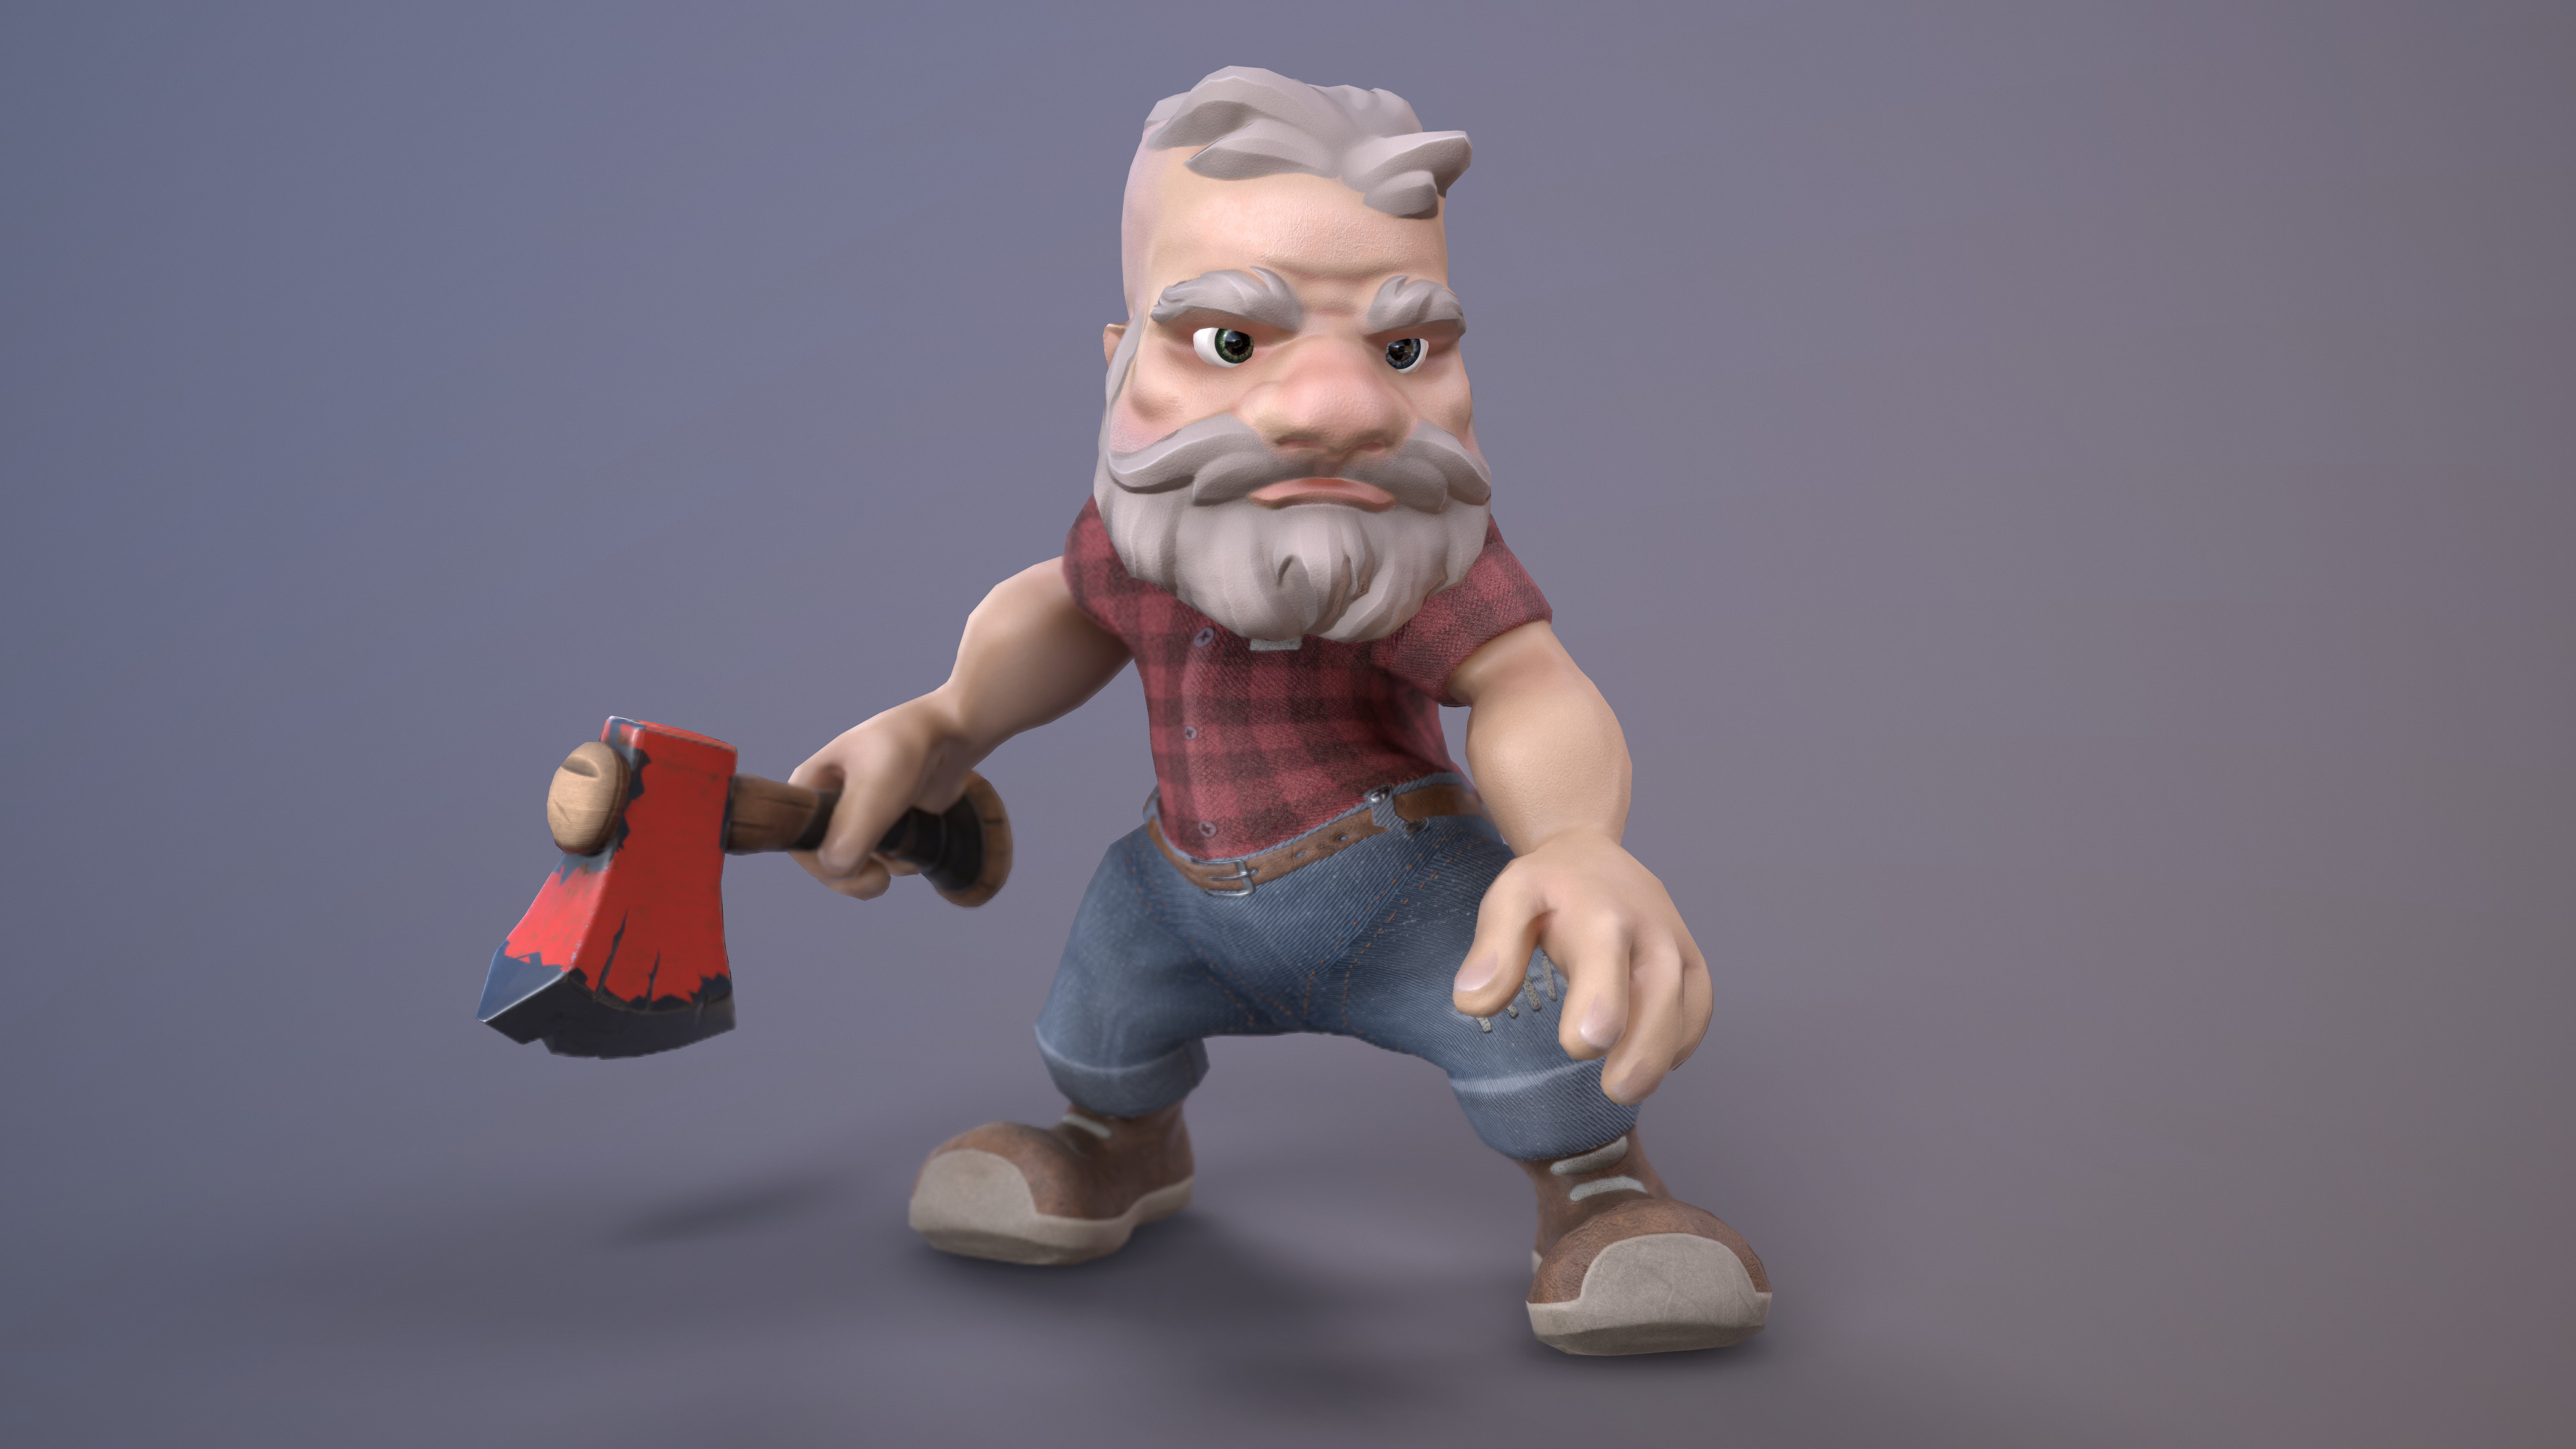 Lumberjack: Lumberjack Jones, Character animation, One-handed ax, A plaid flannel shirt, Art. 3840x2160 4K Wallpaper.